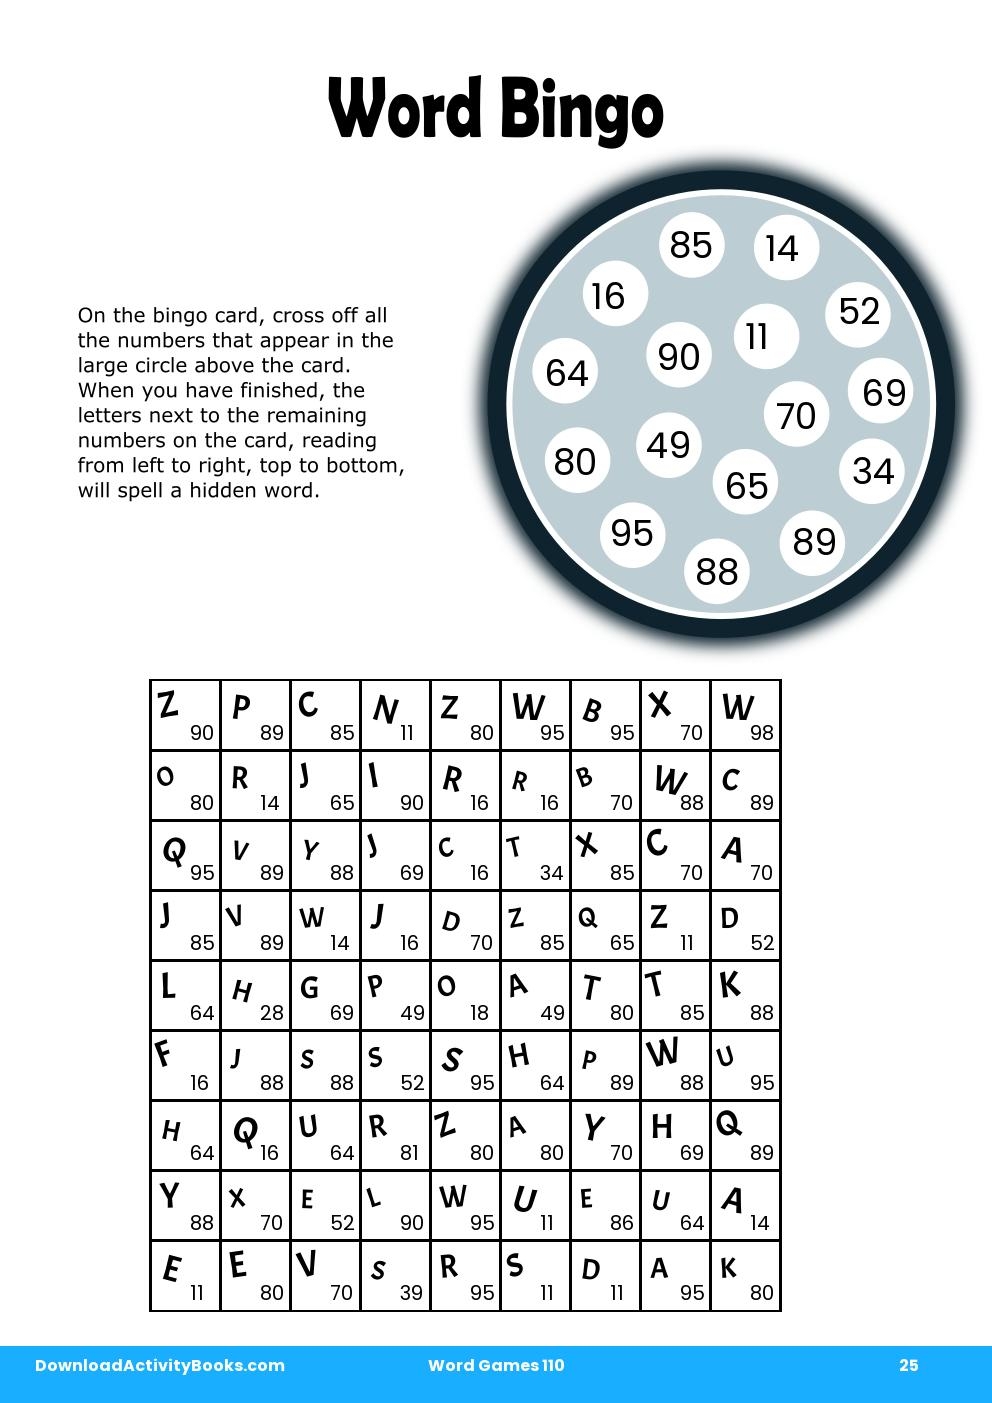 Word Bingo in Word Games 110